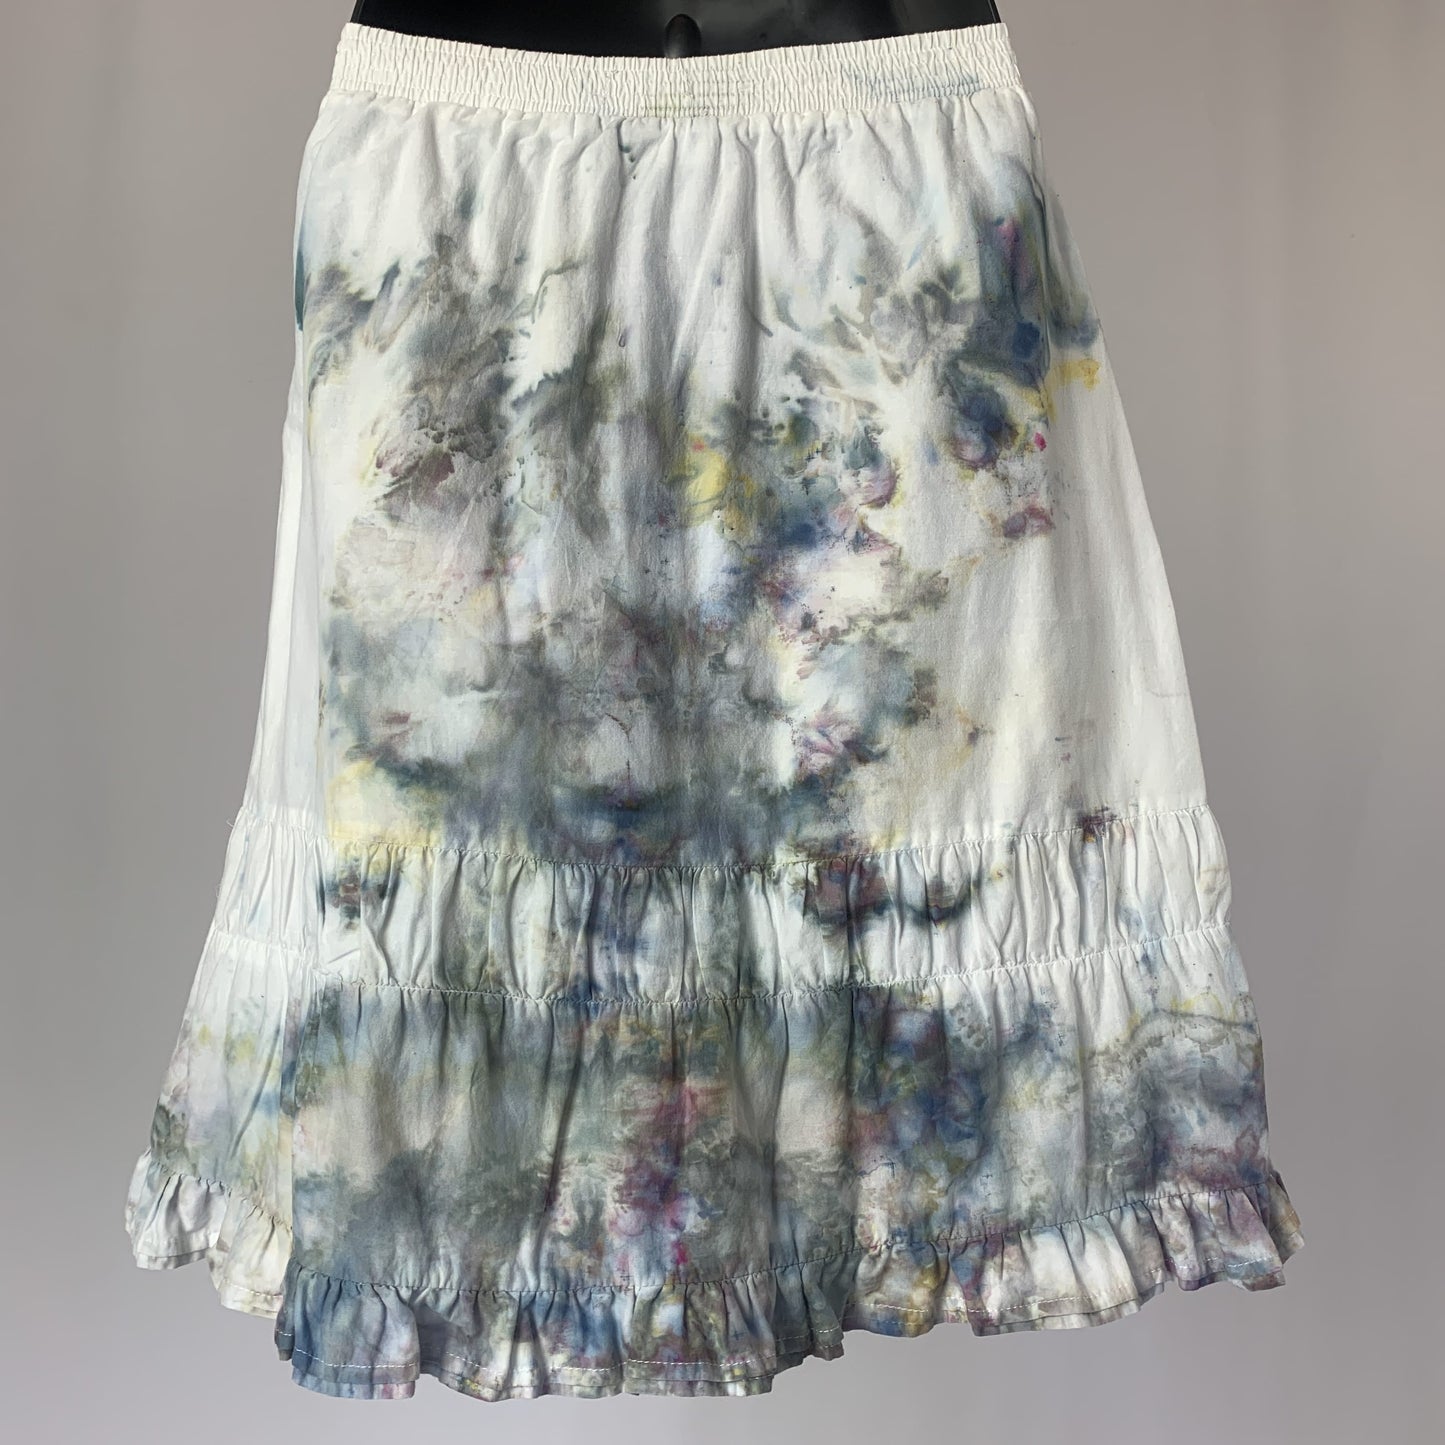 50 Shades of Gray | Knee-length skirt | 26-30” waist